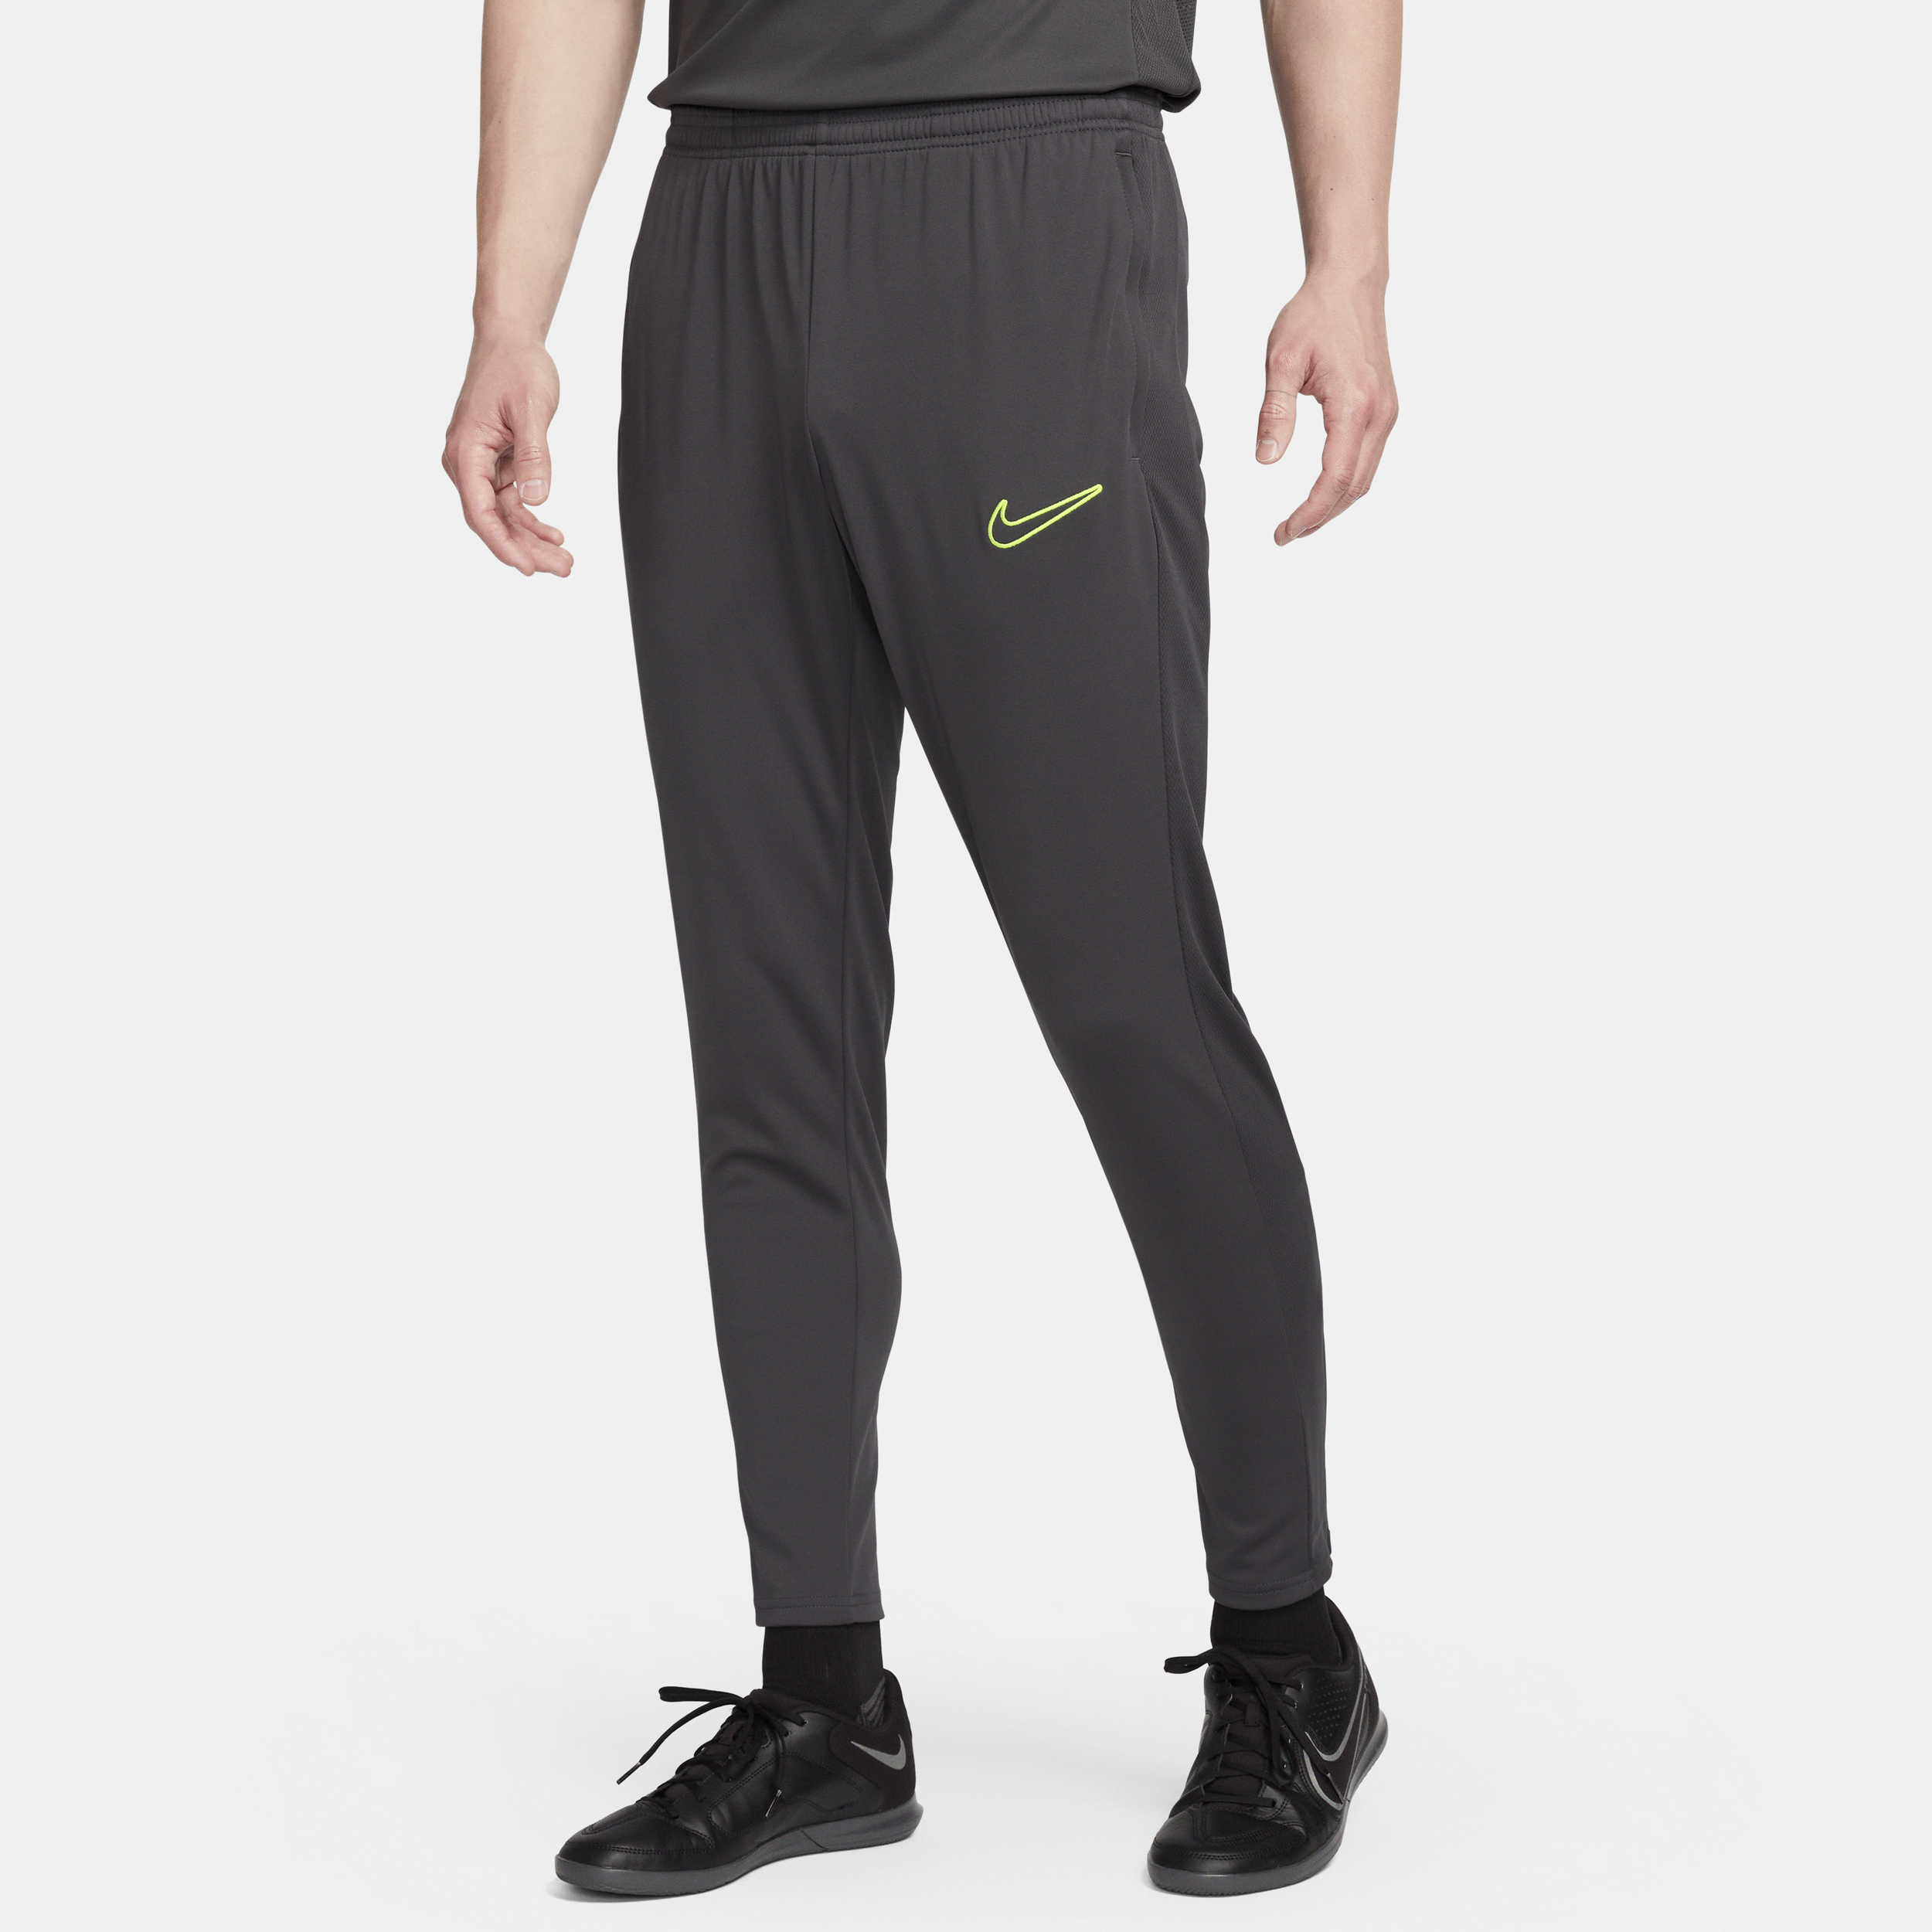 Nike Men's Dri-fit Academy Dri-fit Soccer Pants In Grey